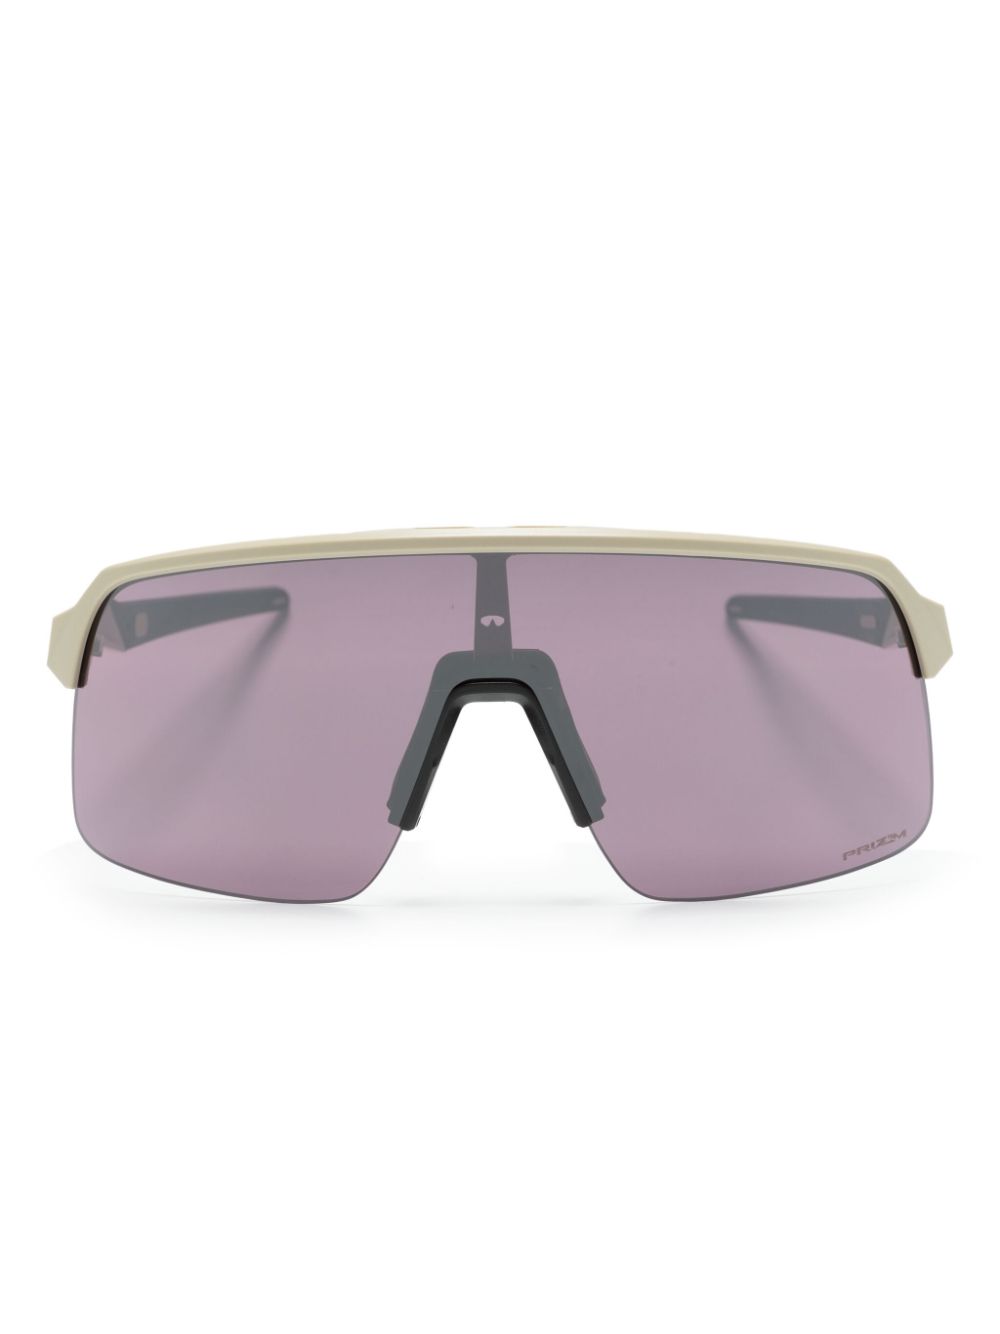 Sutro Lite shield-frame performance sunglasses<BR/><BR/><BR/>